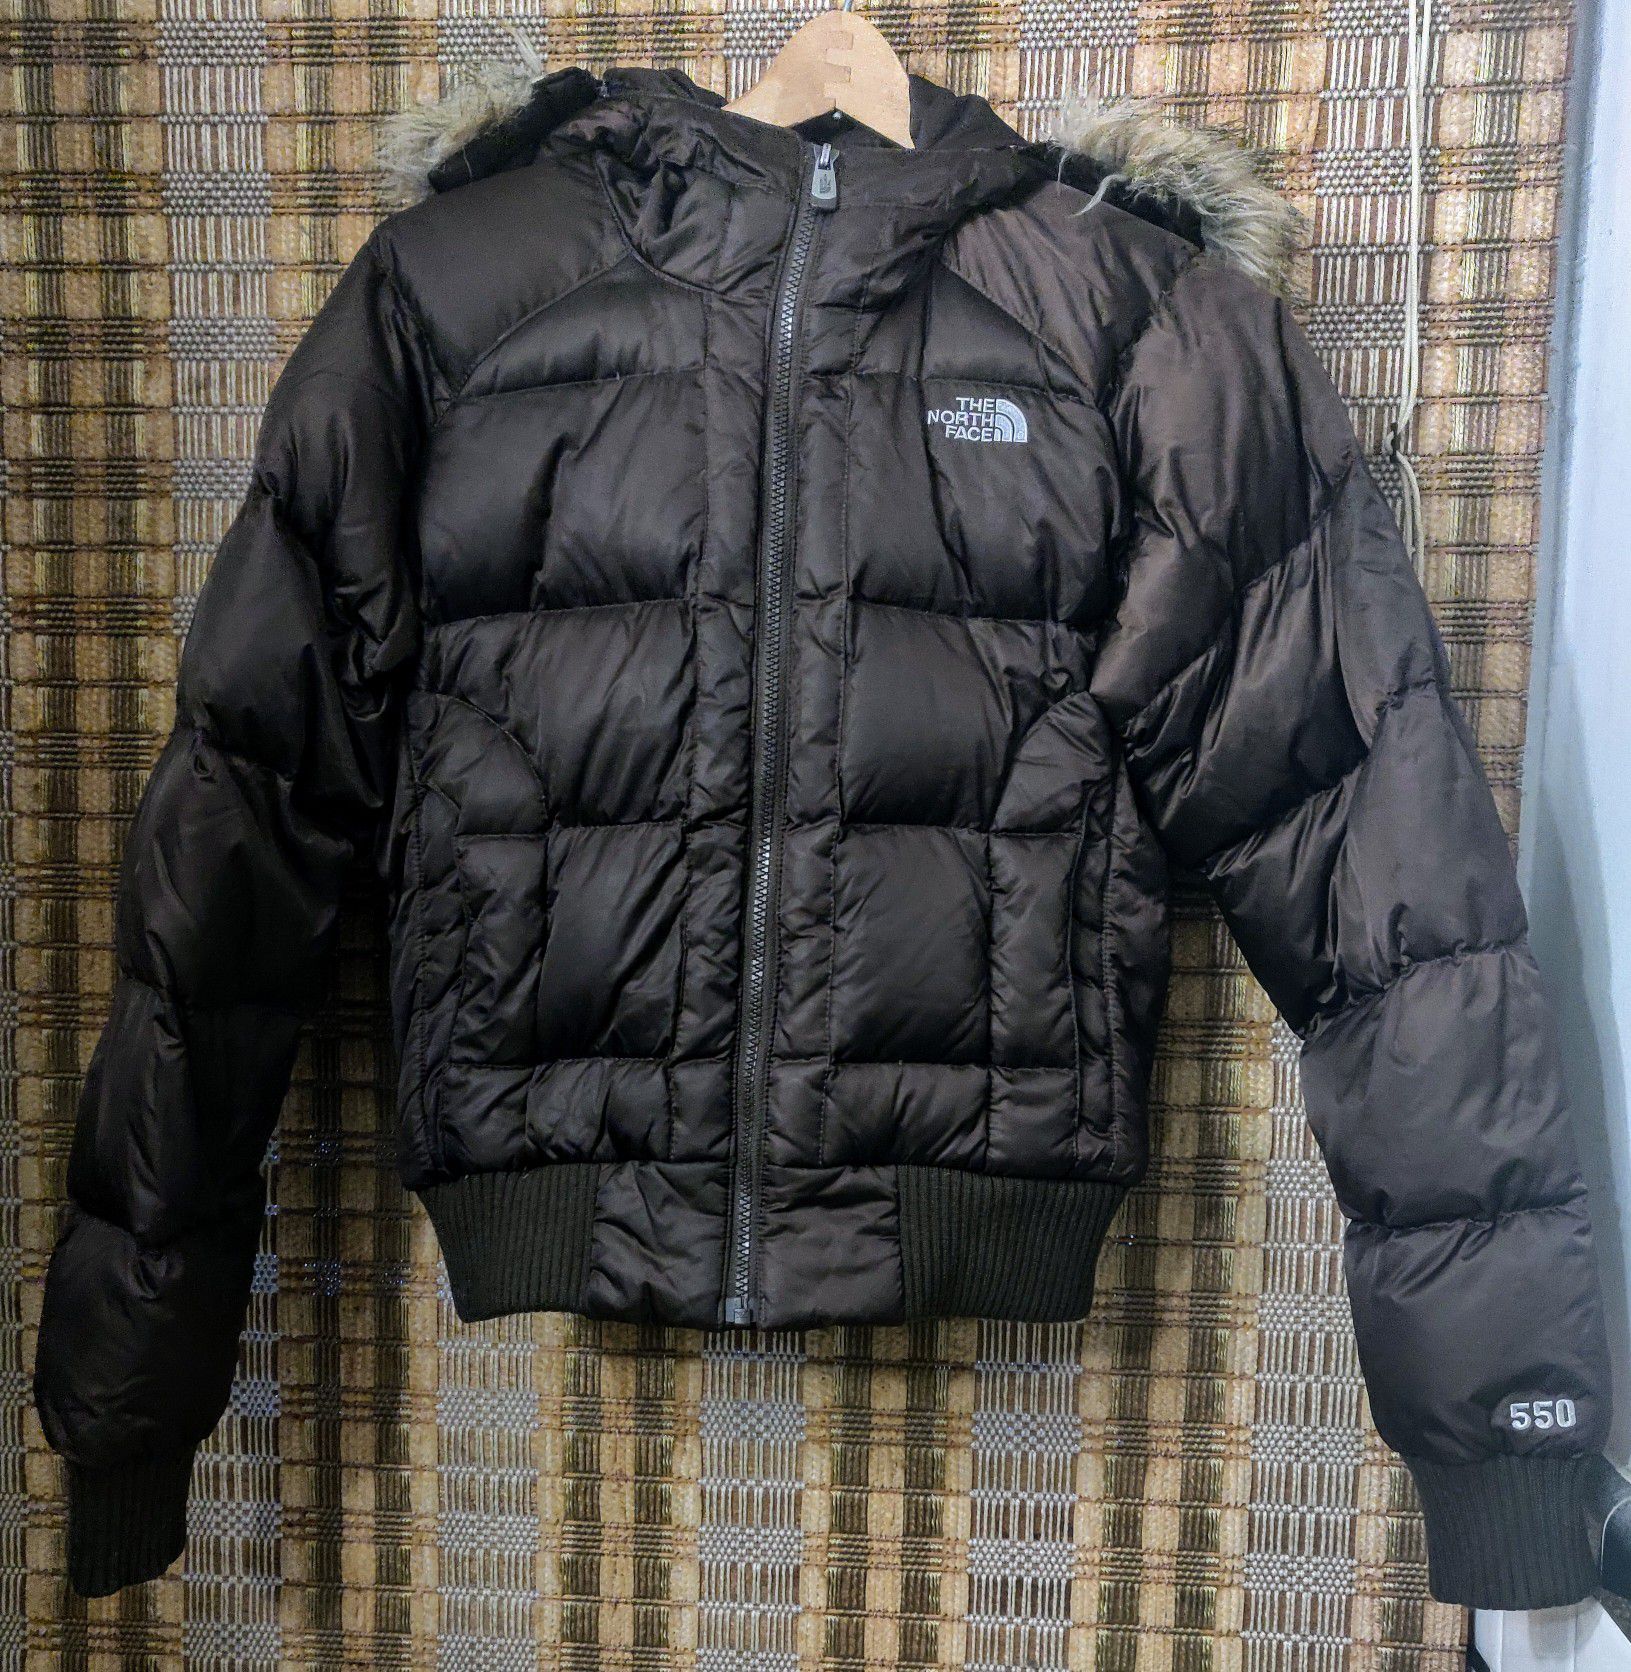 Jacket-Northface 550 women's puffer size s/p